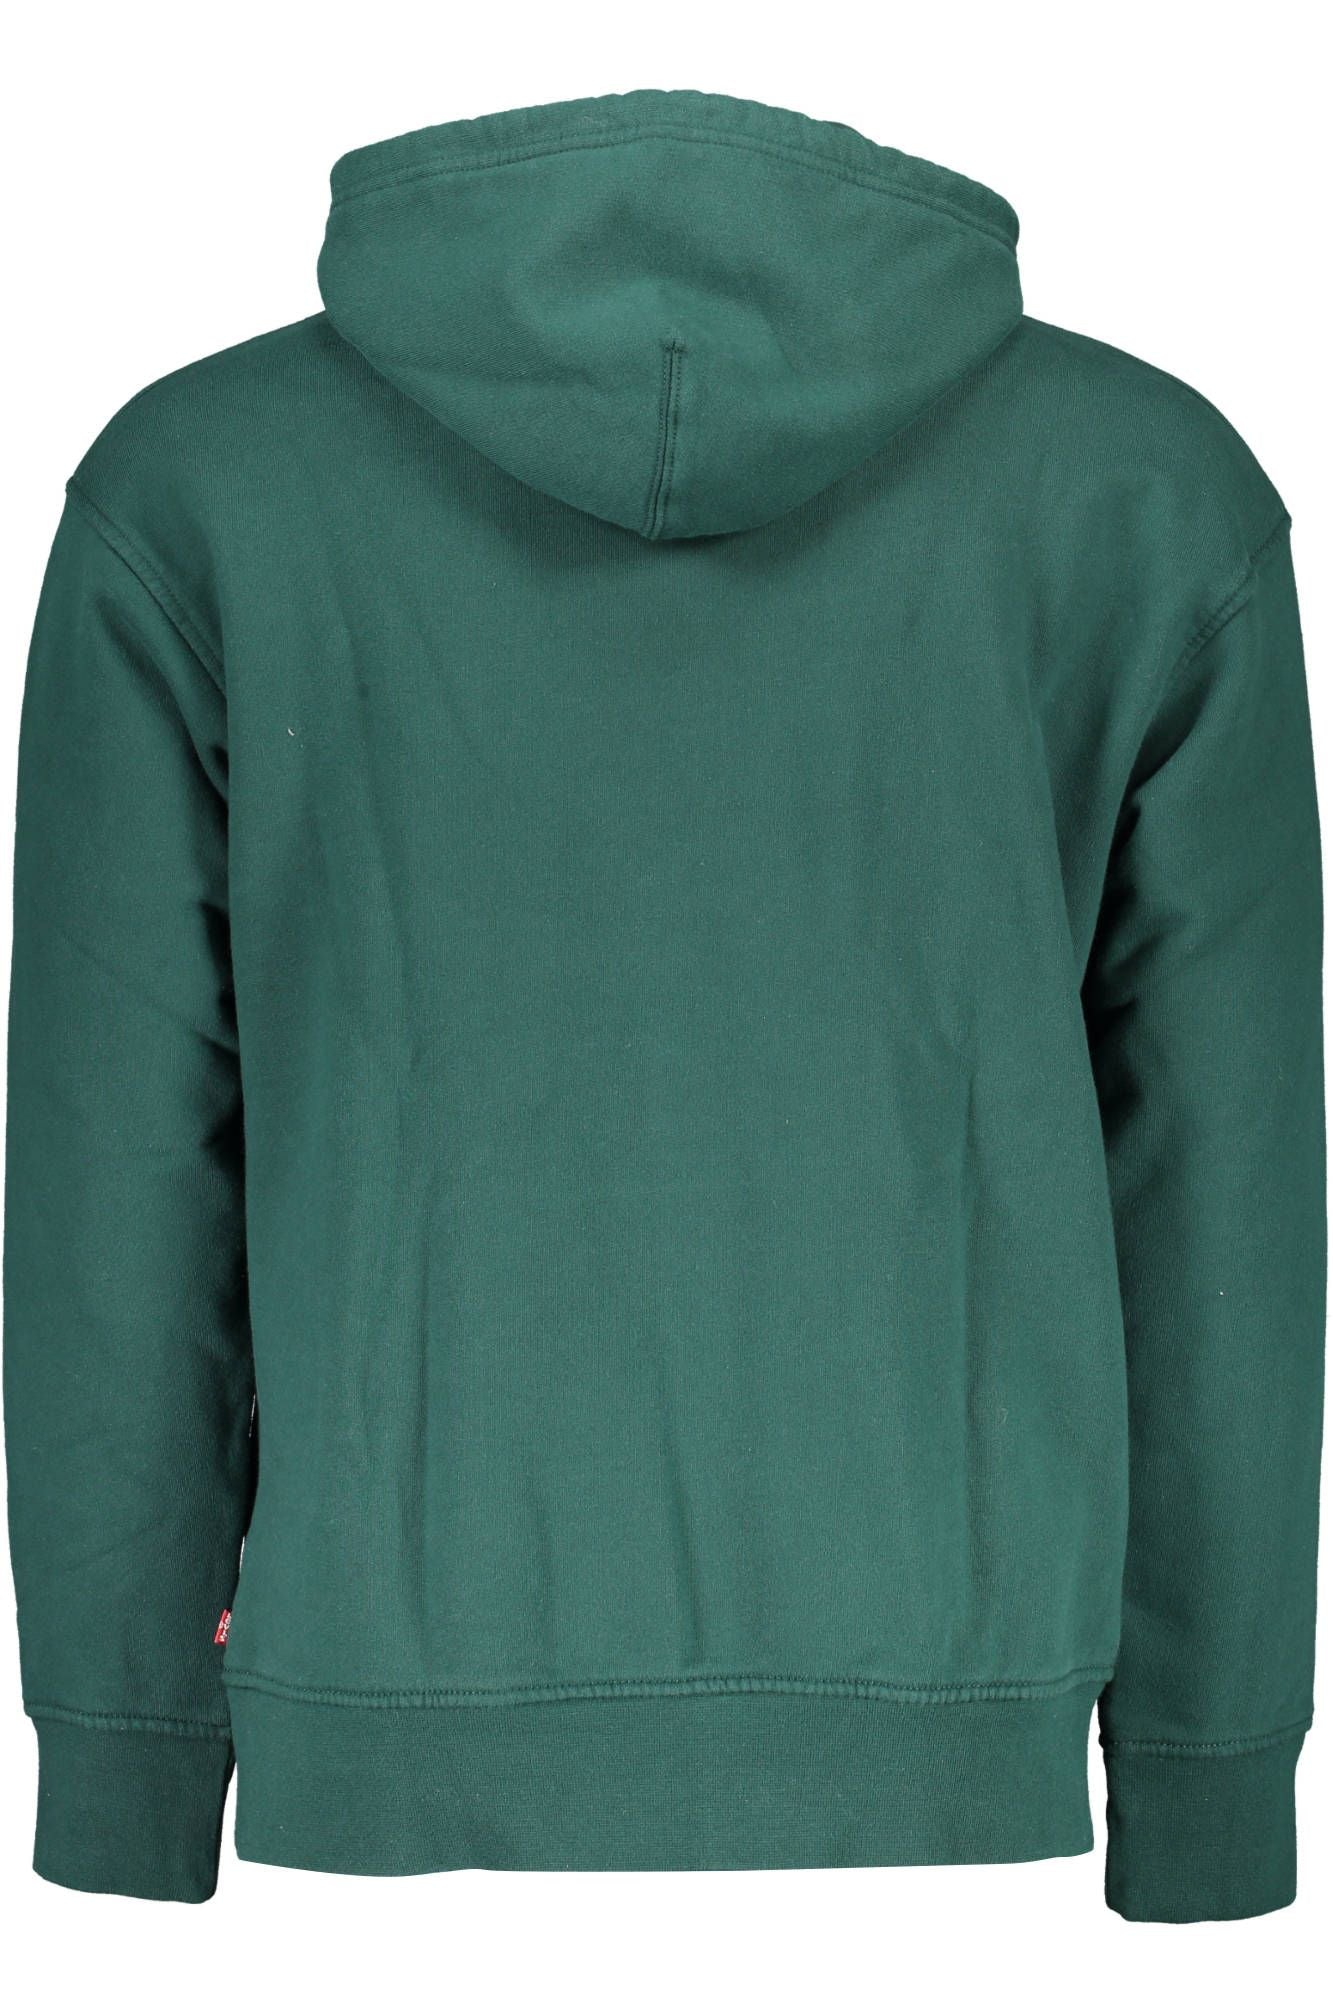 Chic Green Hooded Cotton Sweatshirt - Divitiae Glamour